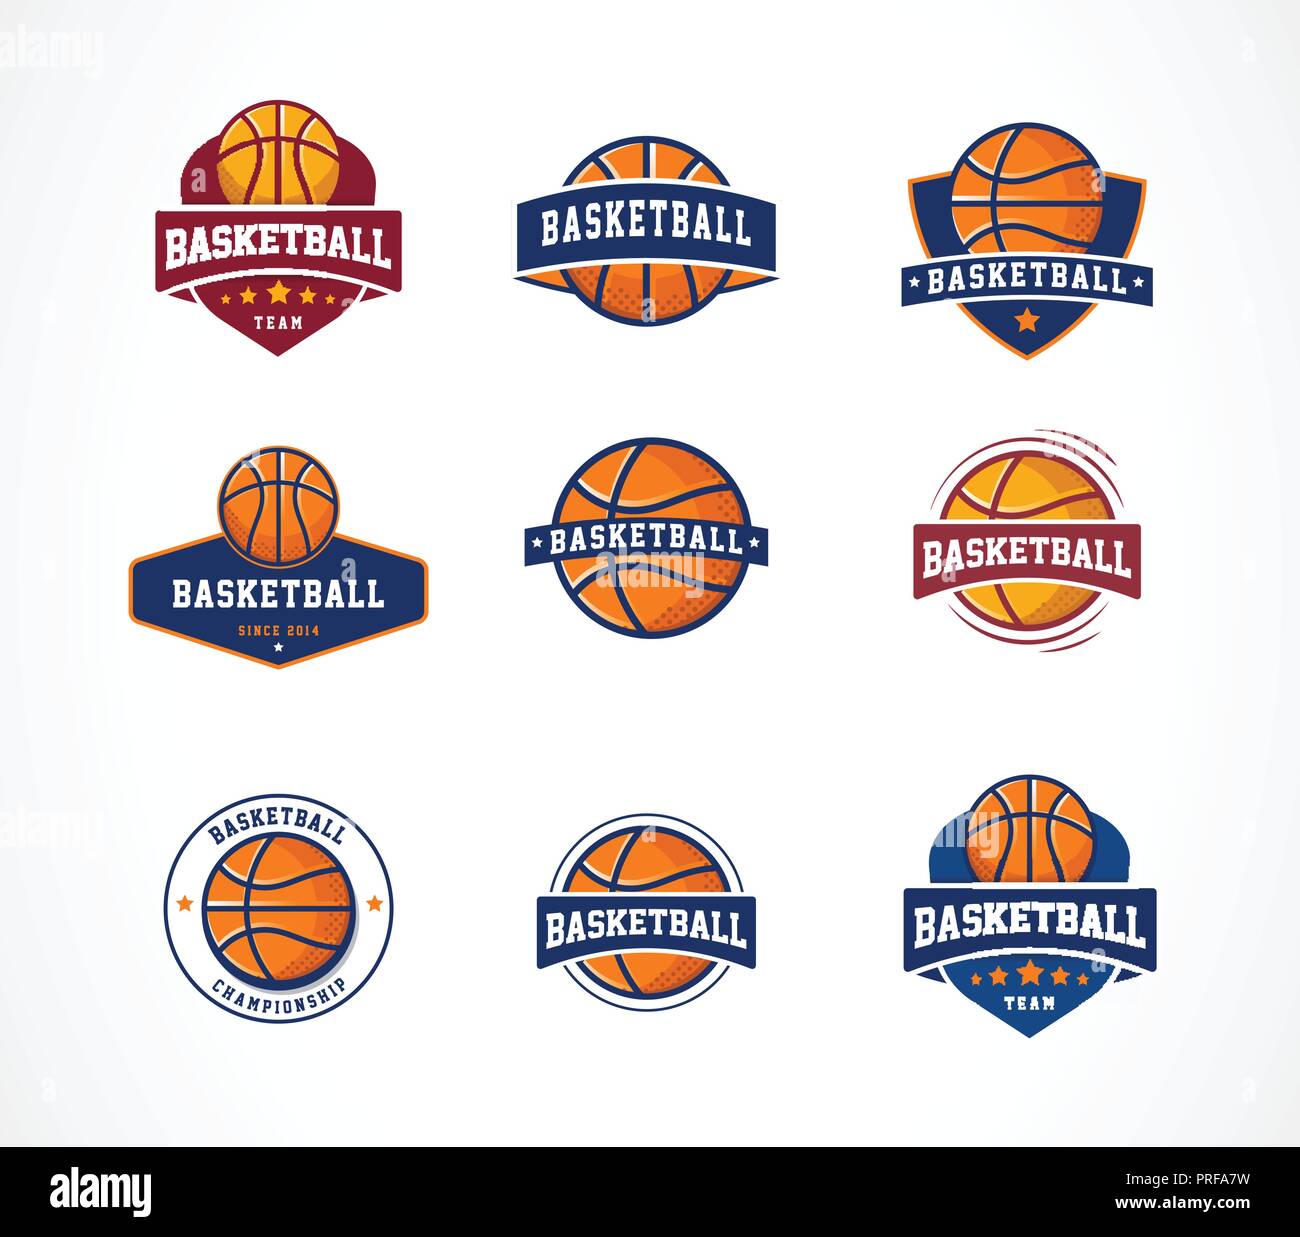 22 Championship Logos ideas  college logo, sports logo, logos